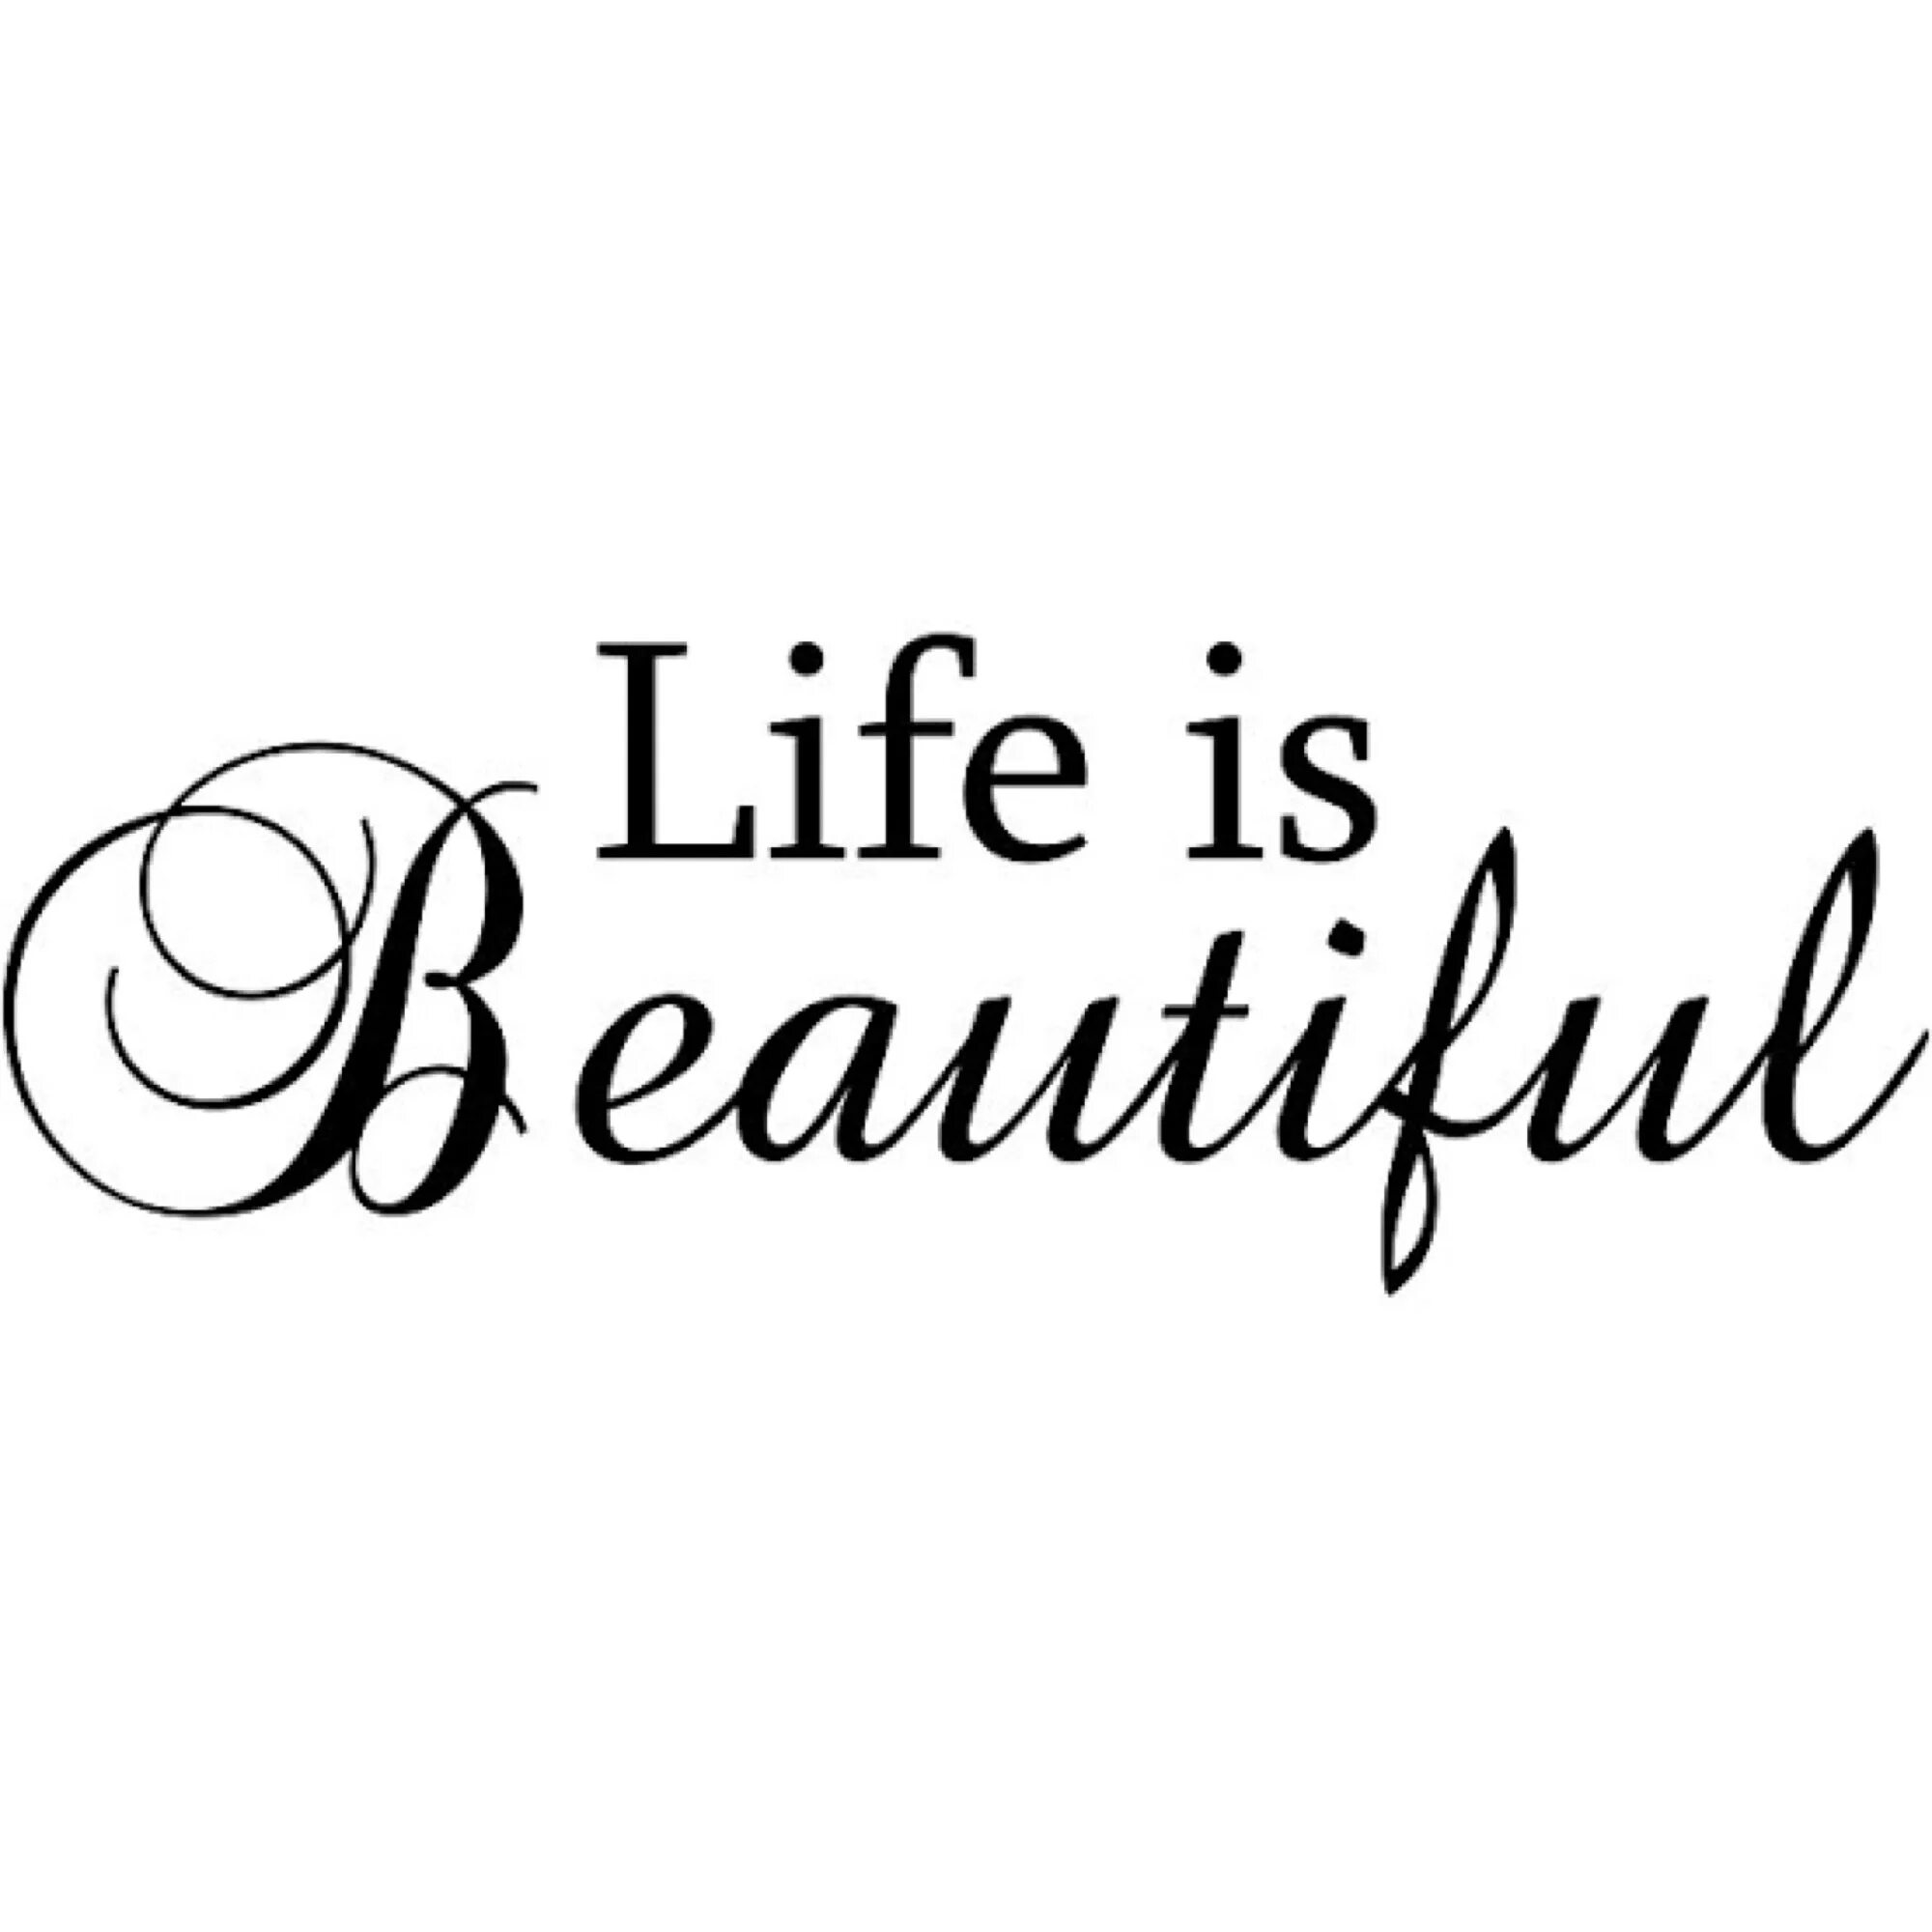 I am living the good life. Life is beautiful надпись. Красивые надписи на английском. Life is beautiful красивая надпись. Красивые надписи Life and beautiful.